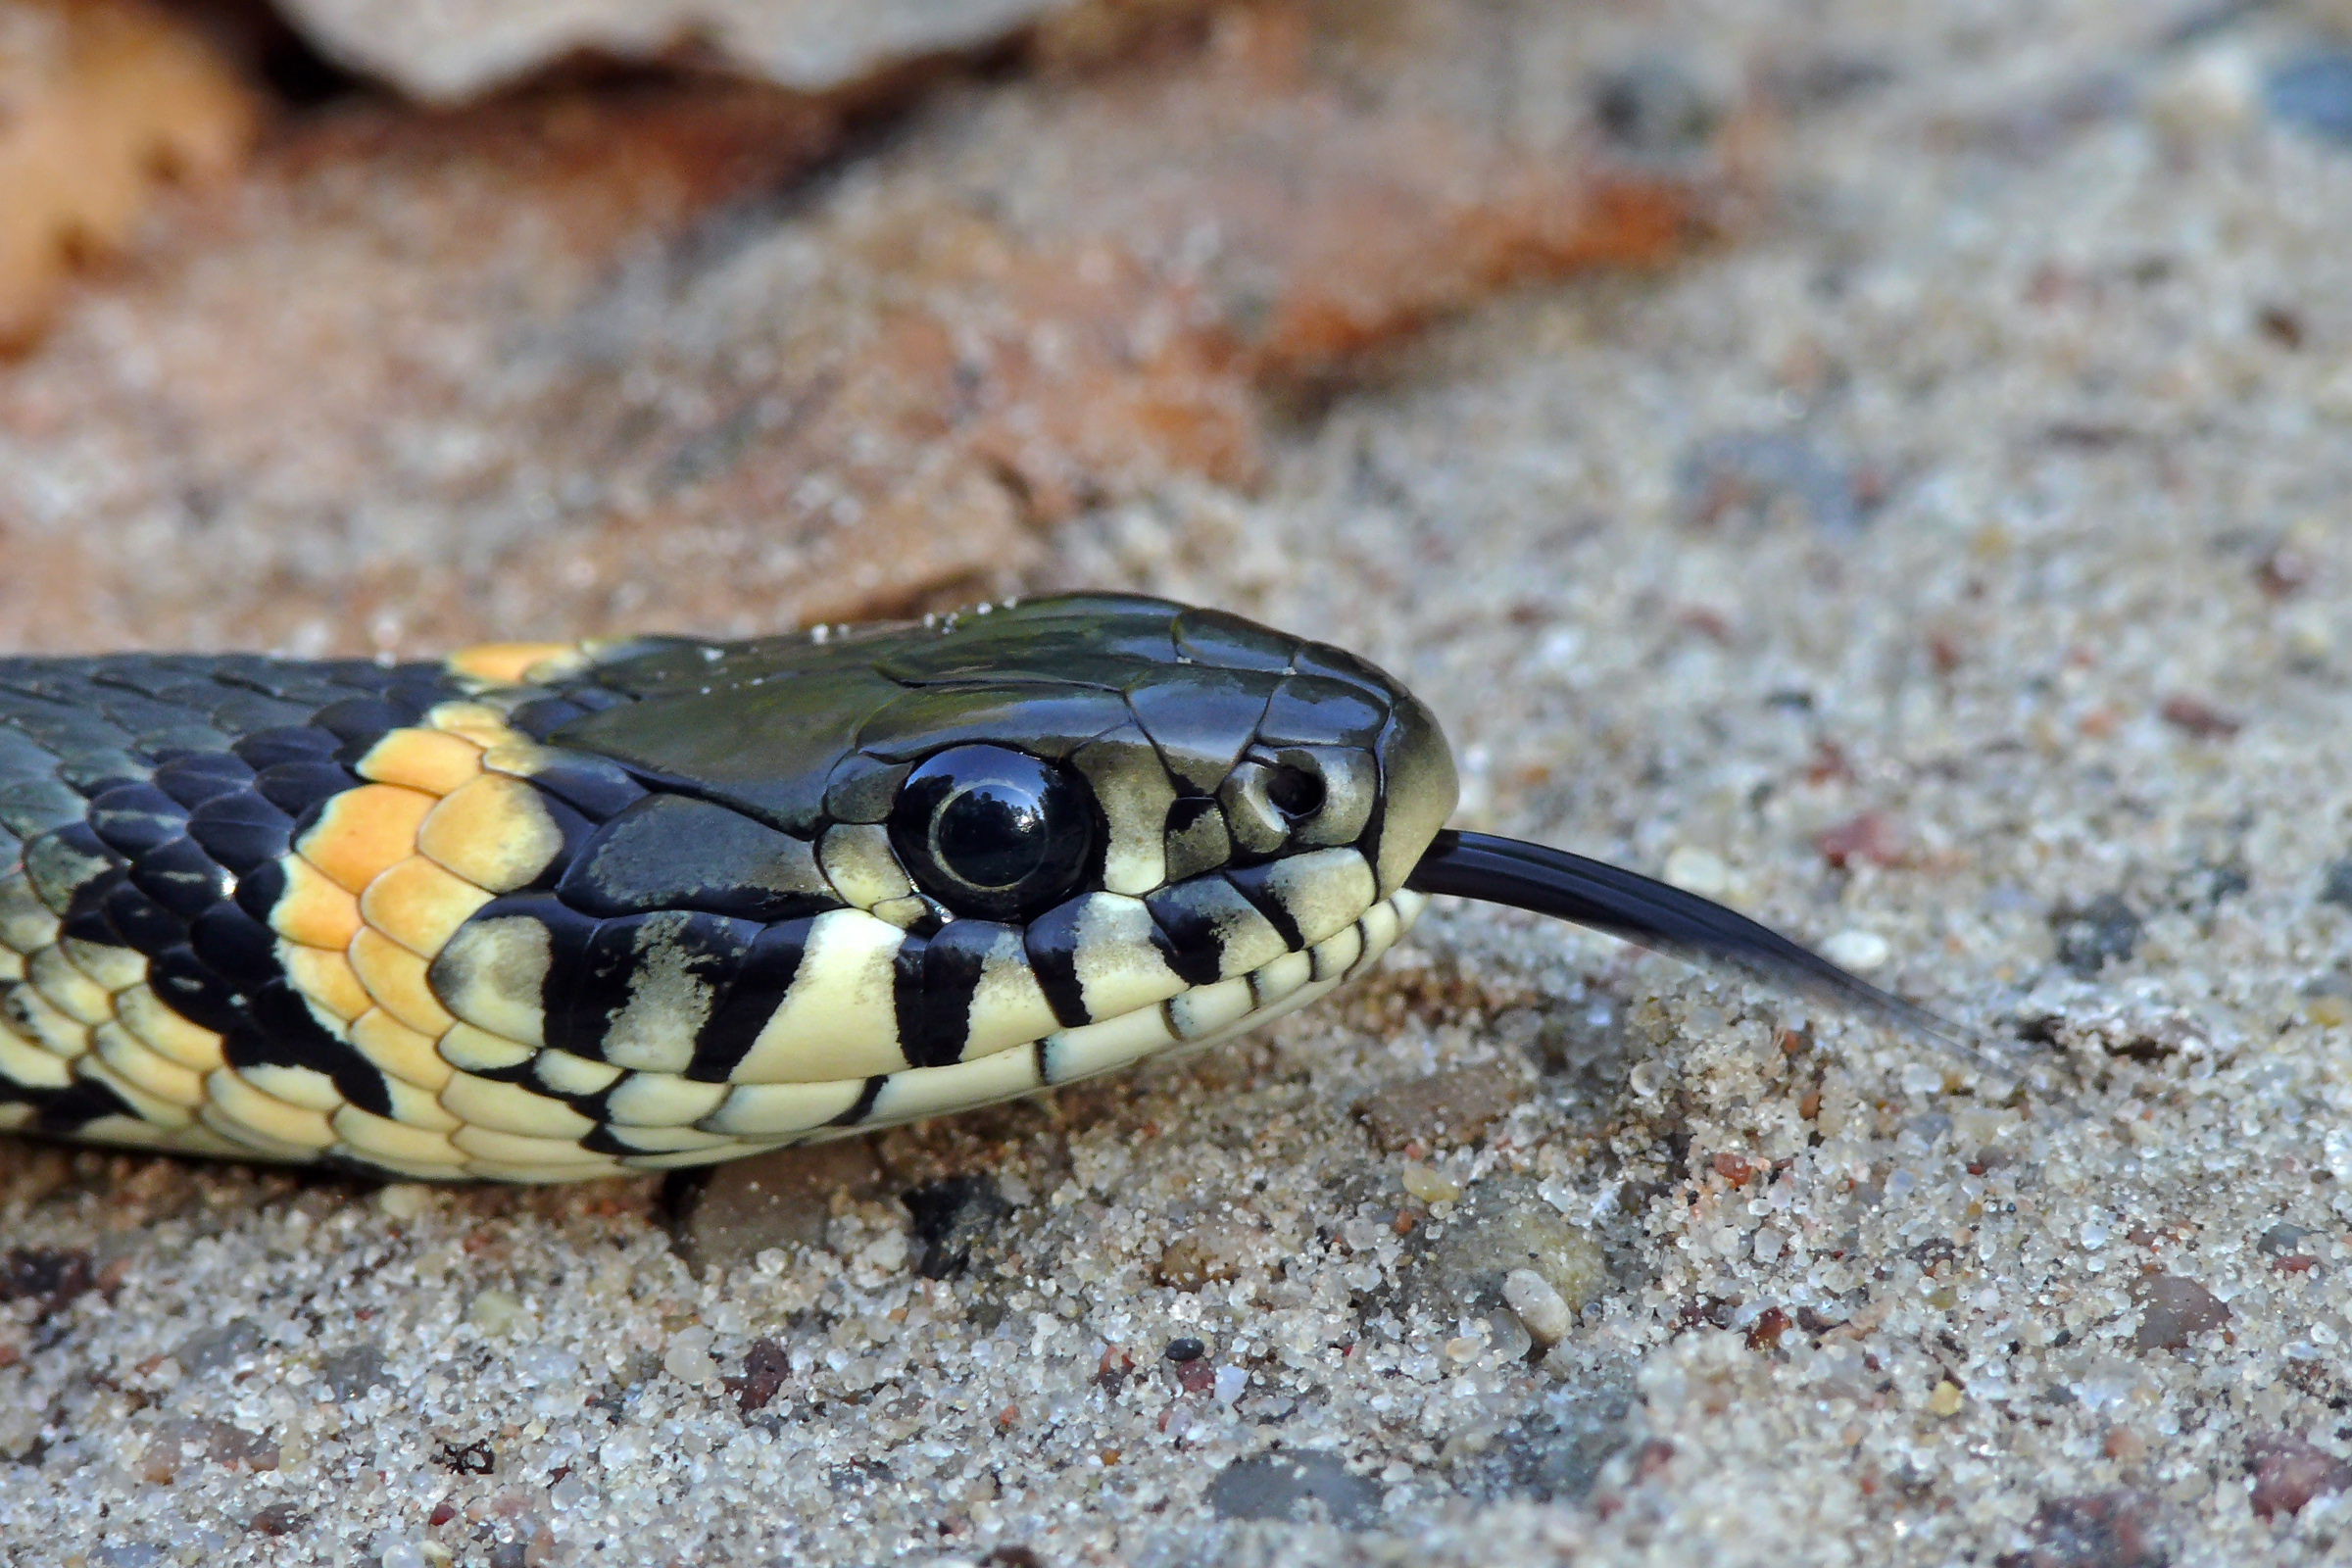 File:The Grass Snake - Natrix natrix.jpg - Wikimedia Commons